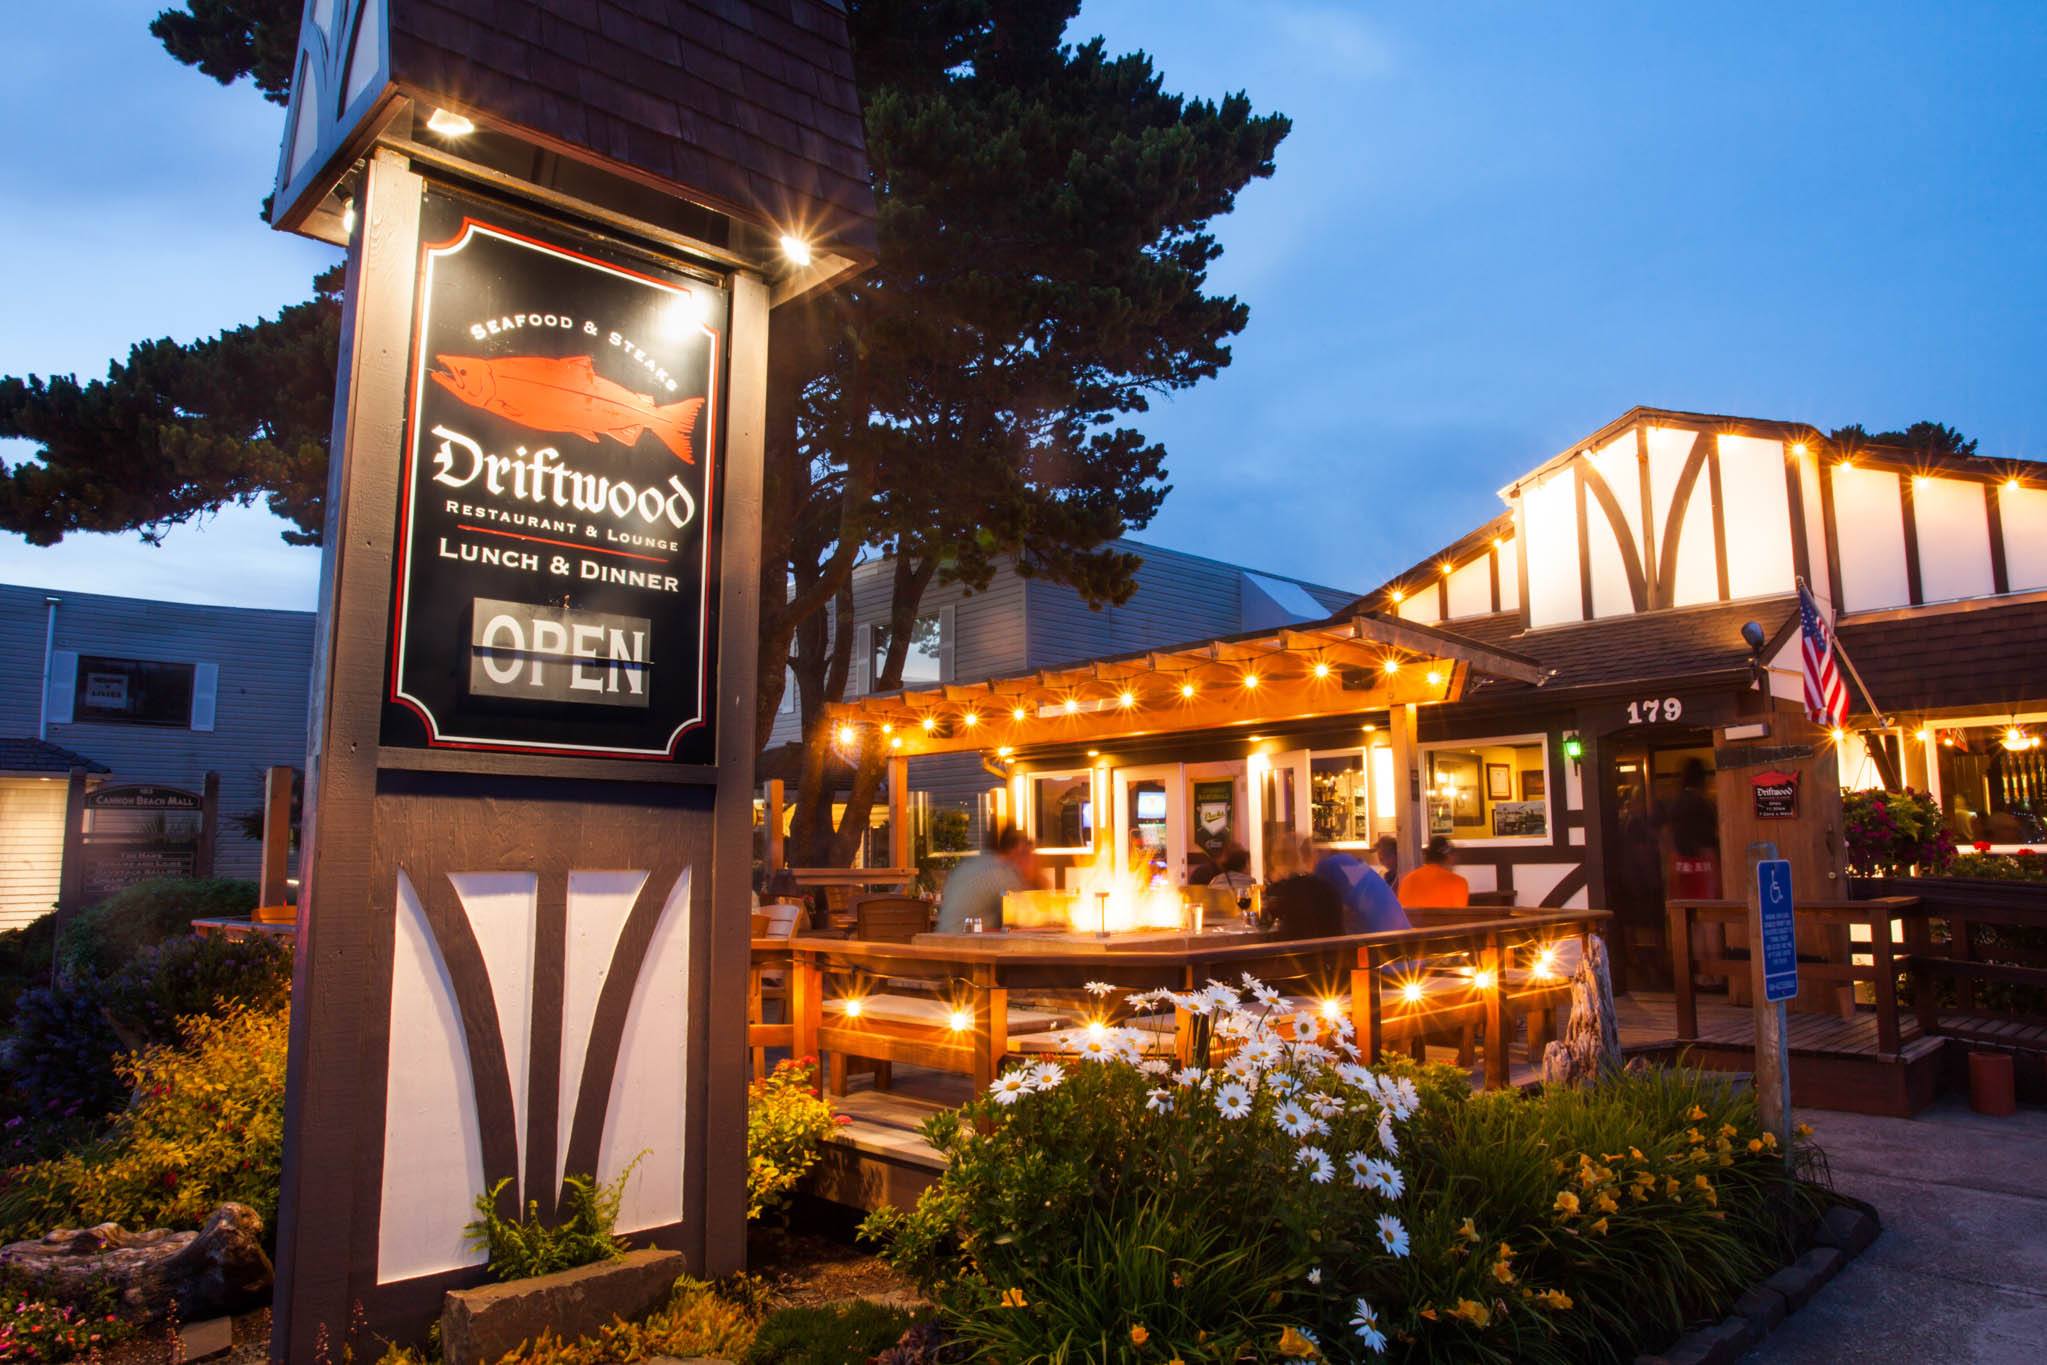 Driftwood restaurant at night